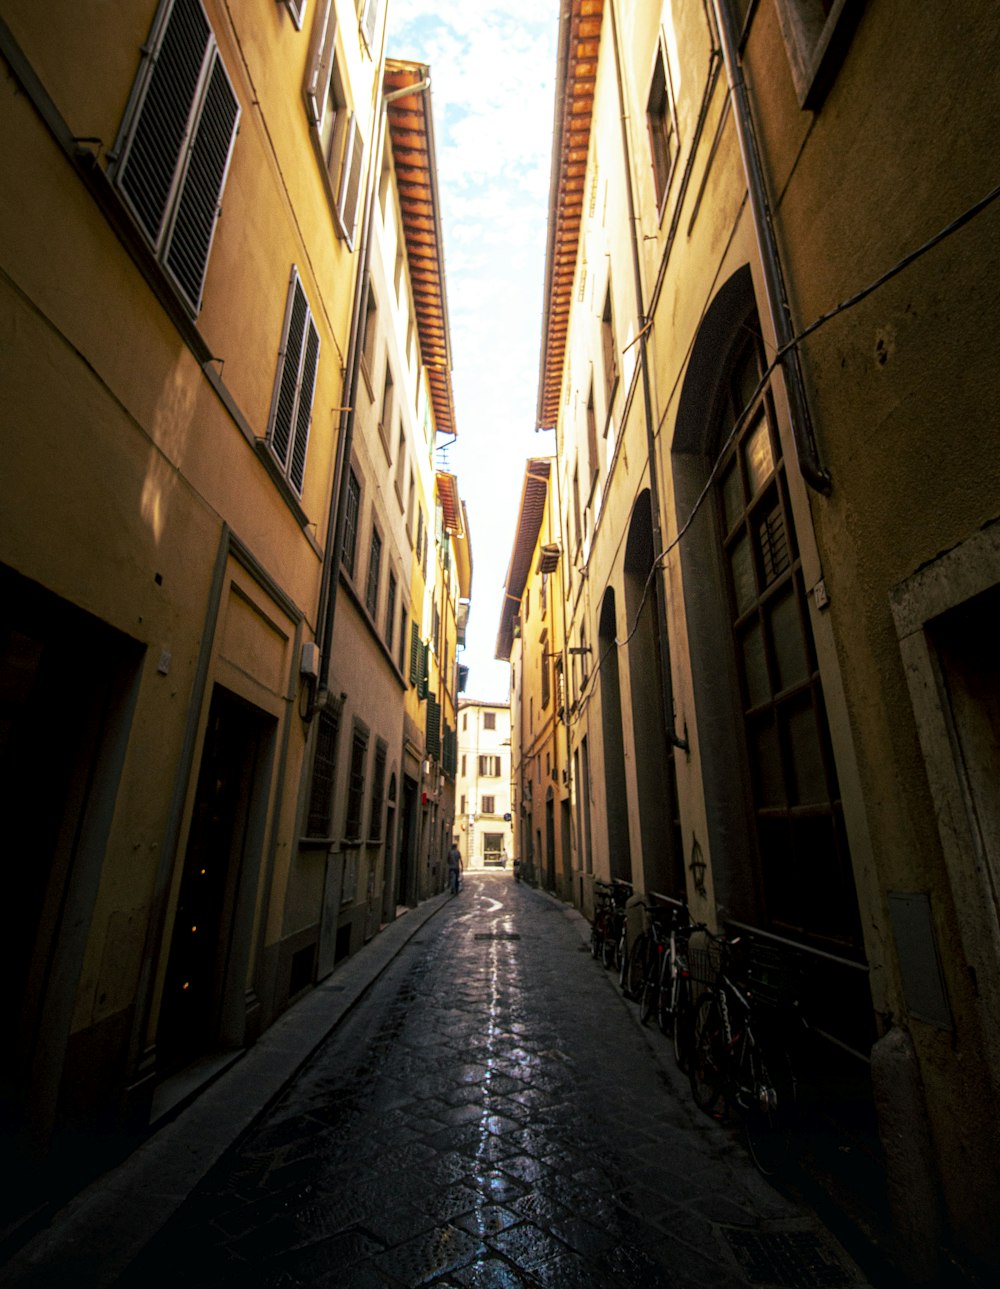 a narrow alleyway between two buildings in a city